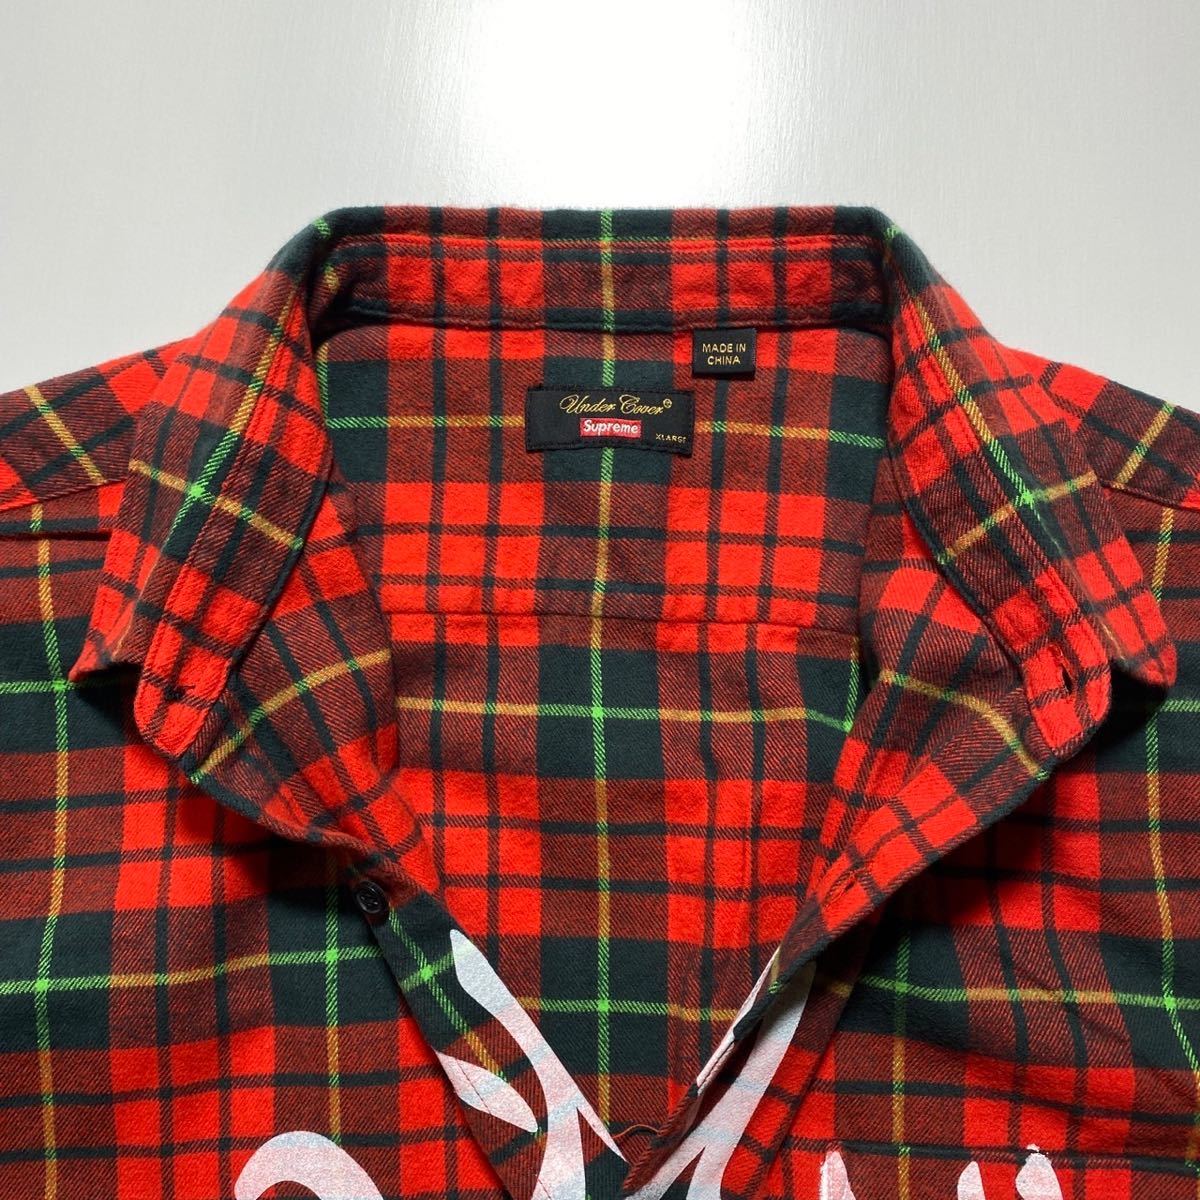 XL Supreme®/UNDERCOVER S/S Flannel Shirt odmalihnogu.org